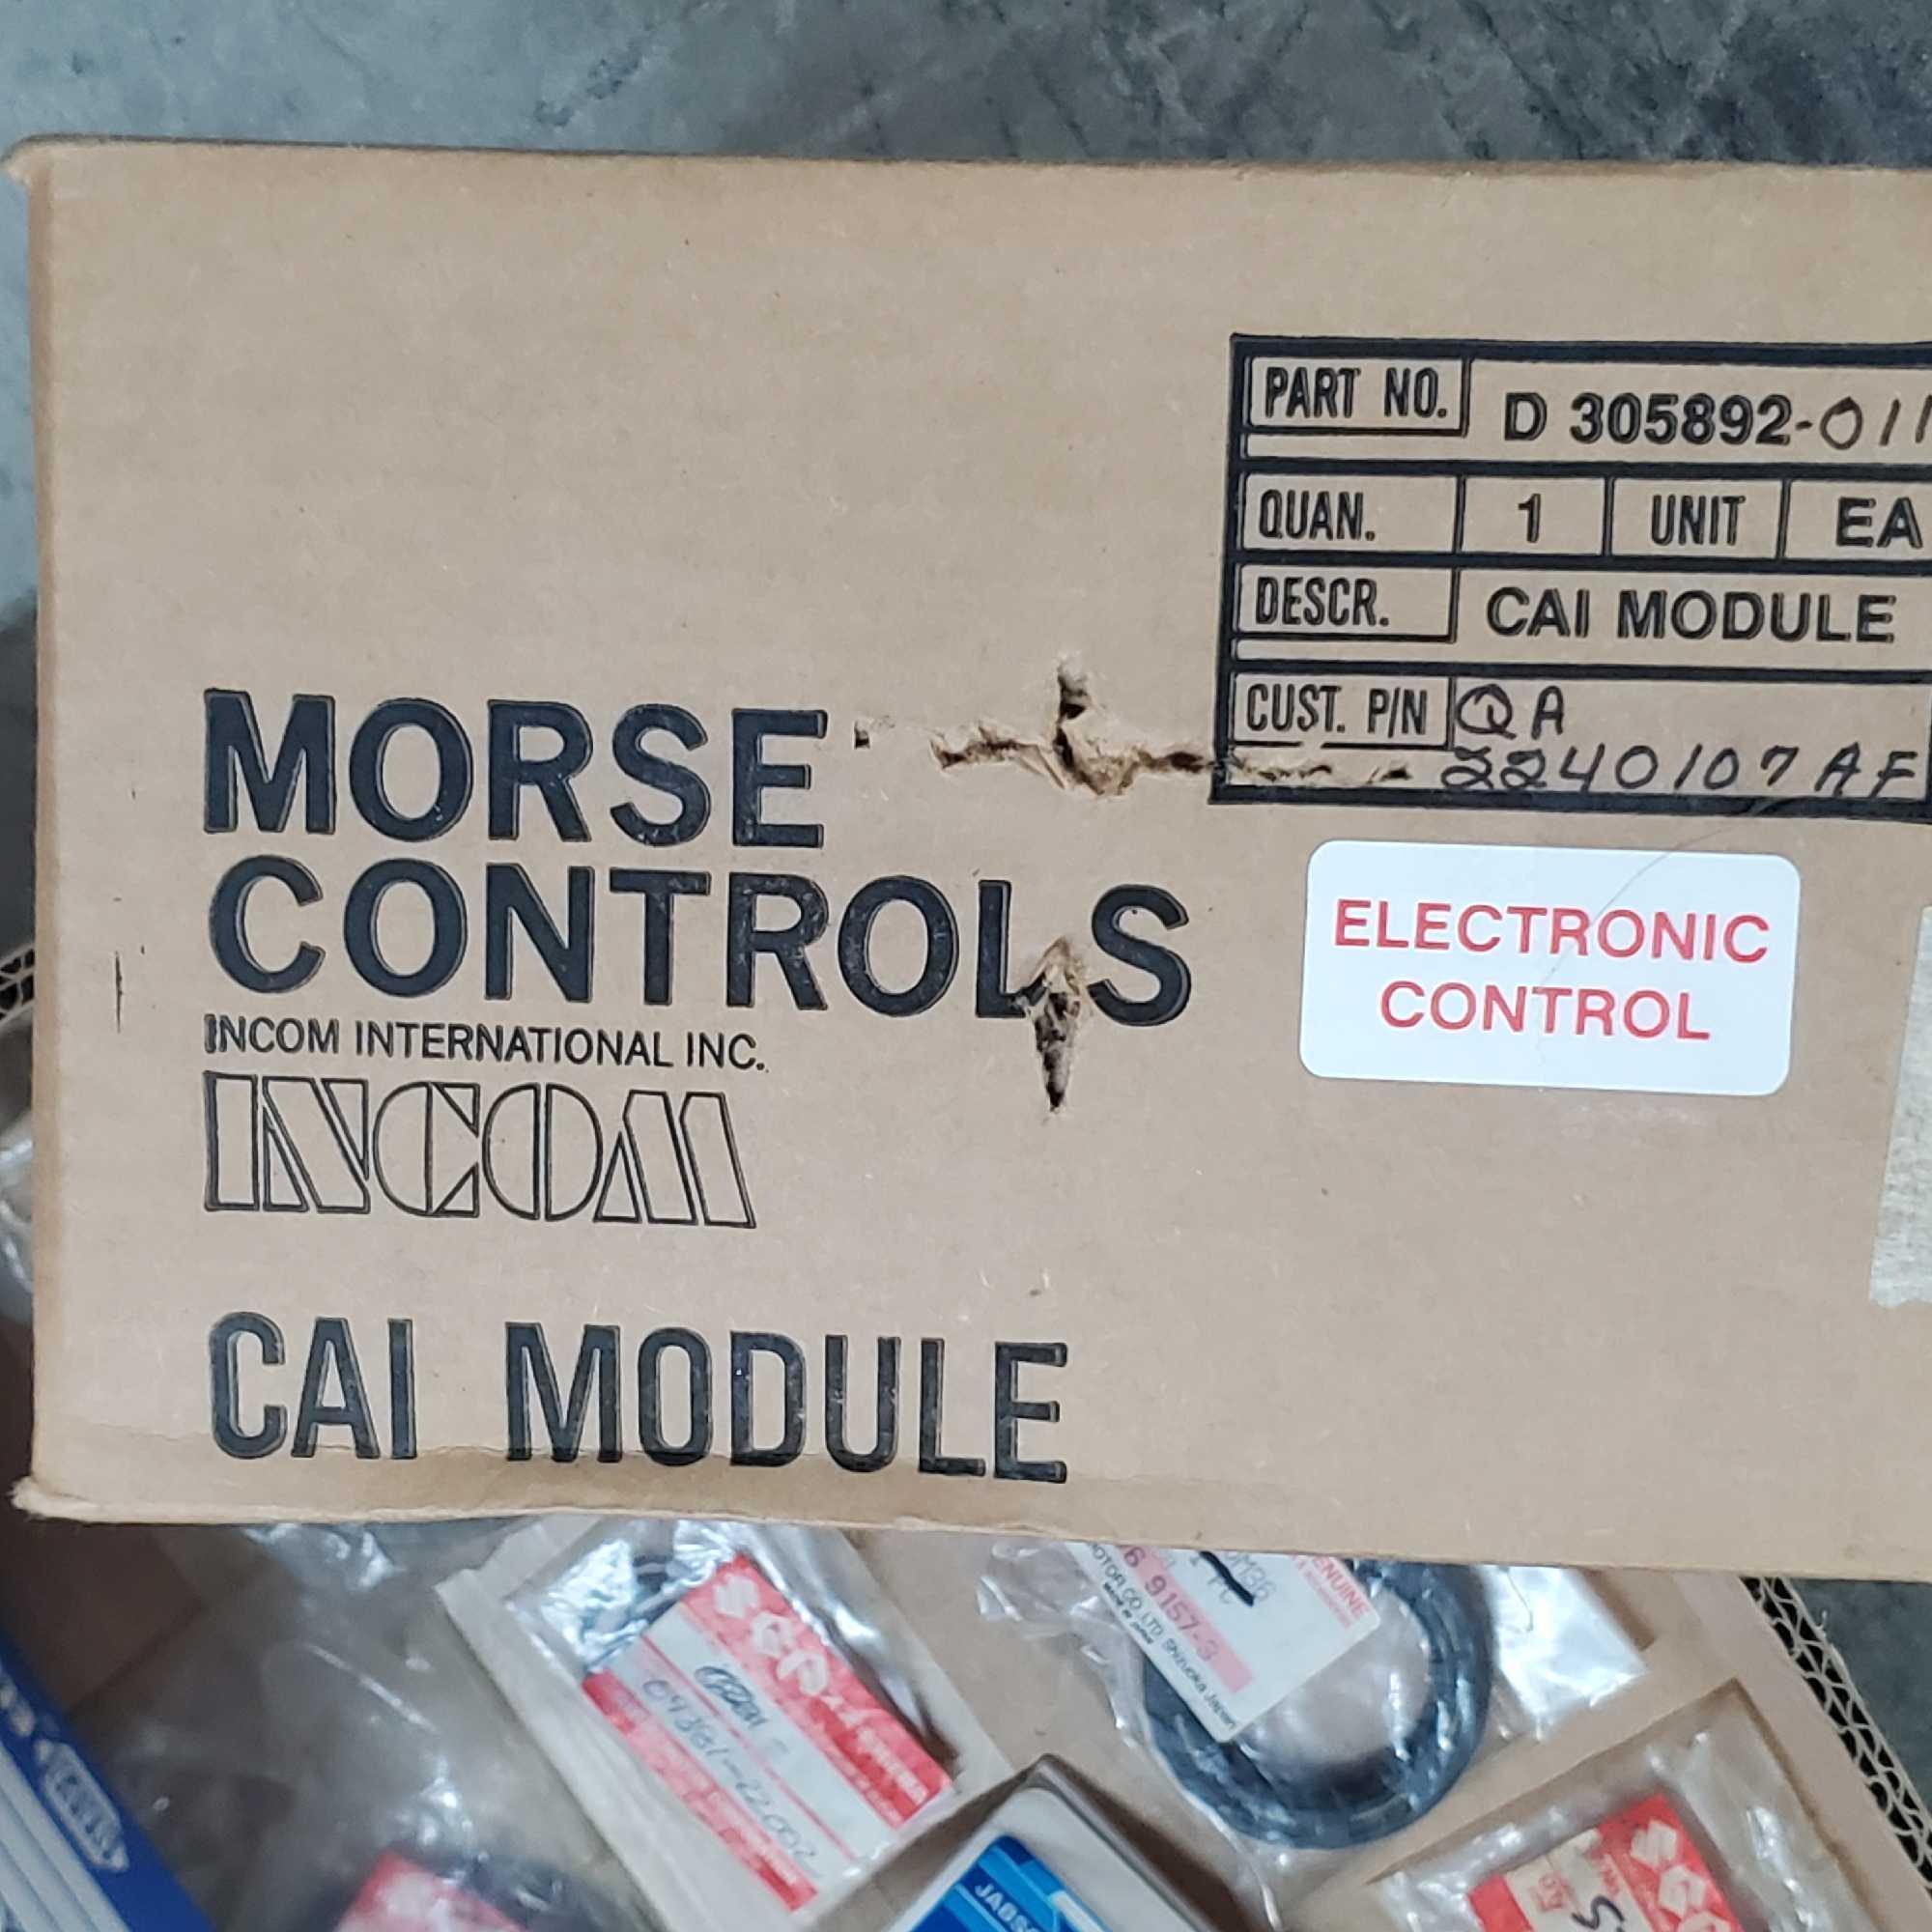 Box of Suzuki Morse Johnson Evinrude marine starter motor CAI module tire bar kit rig replacement